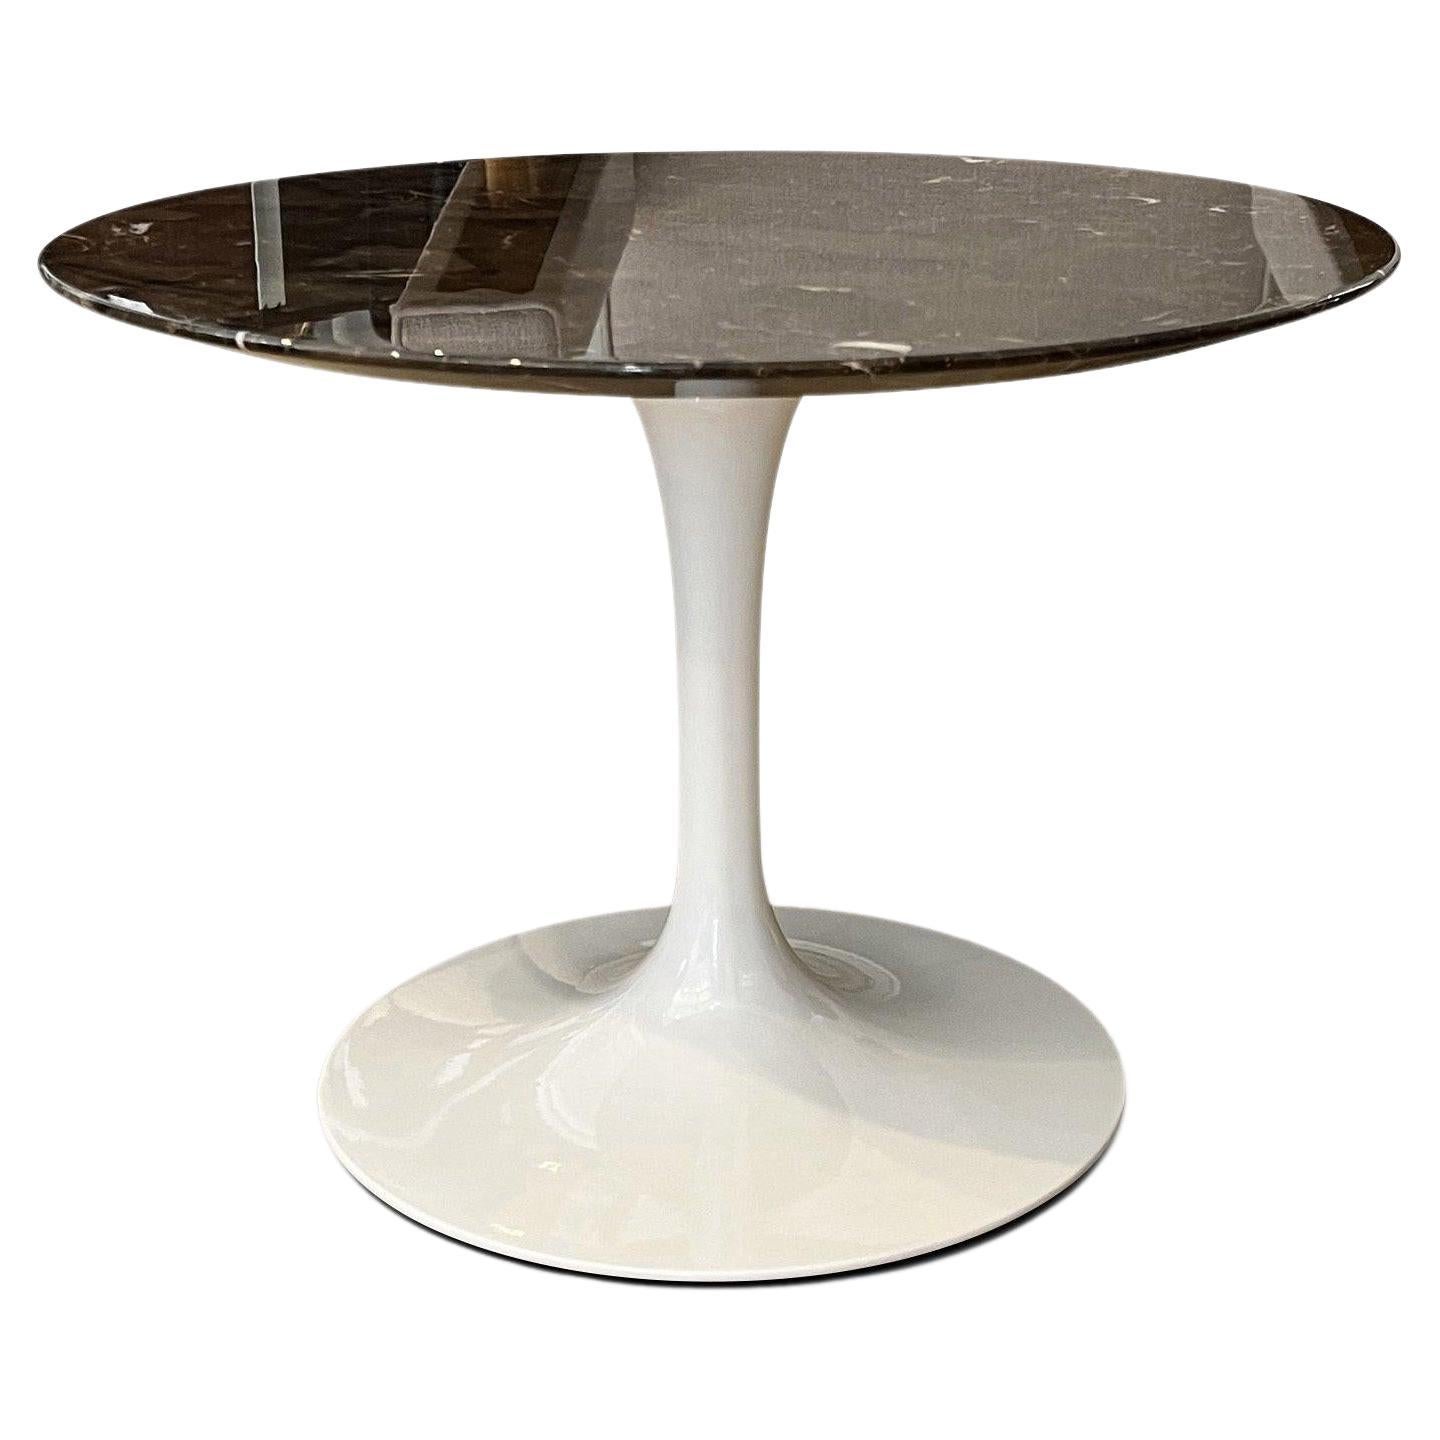 Petite table basse ronde avec plateau en marbre Espresso et base blanche Eero Saarinen